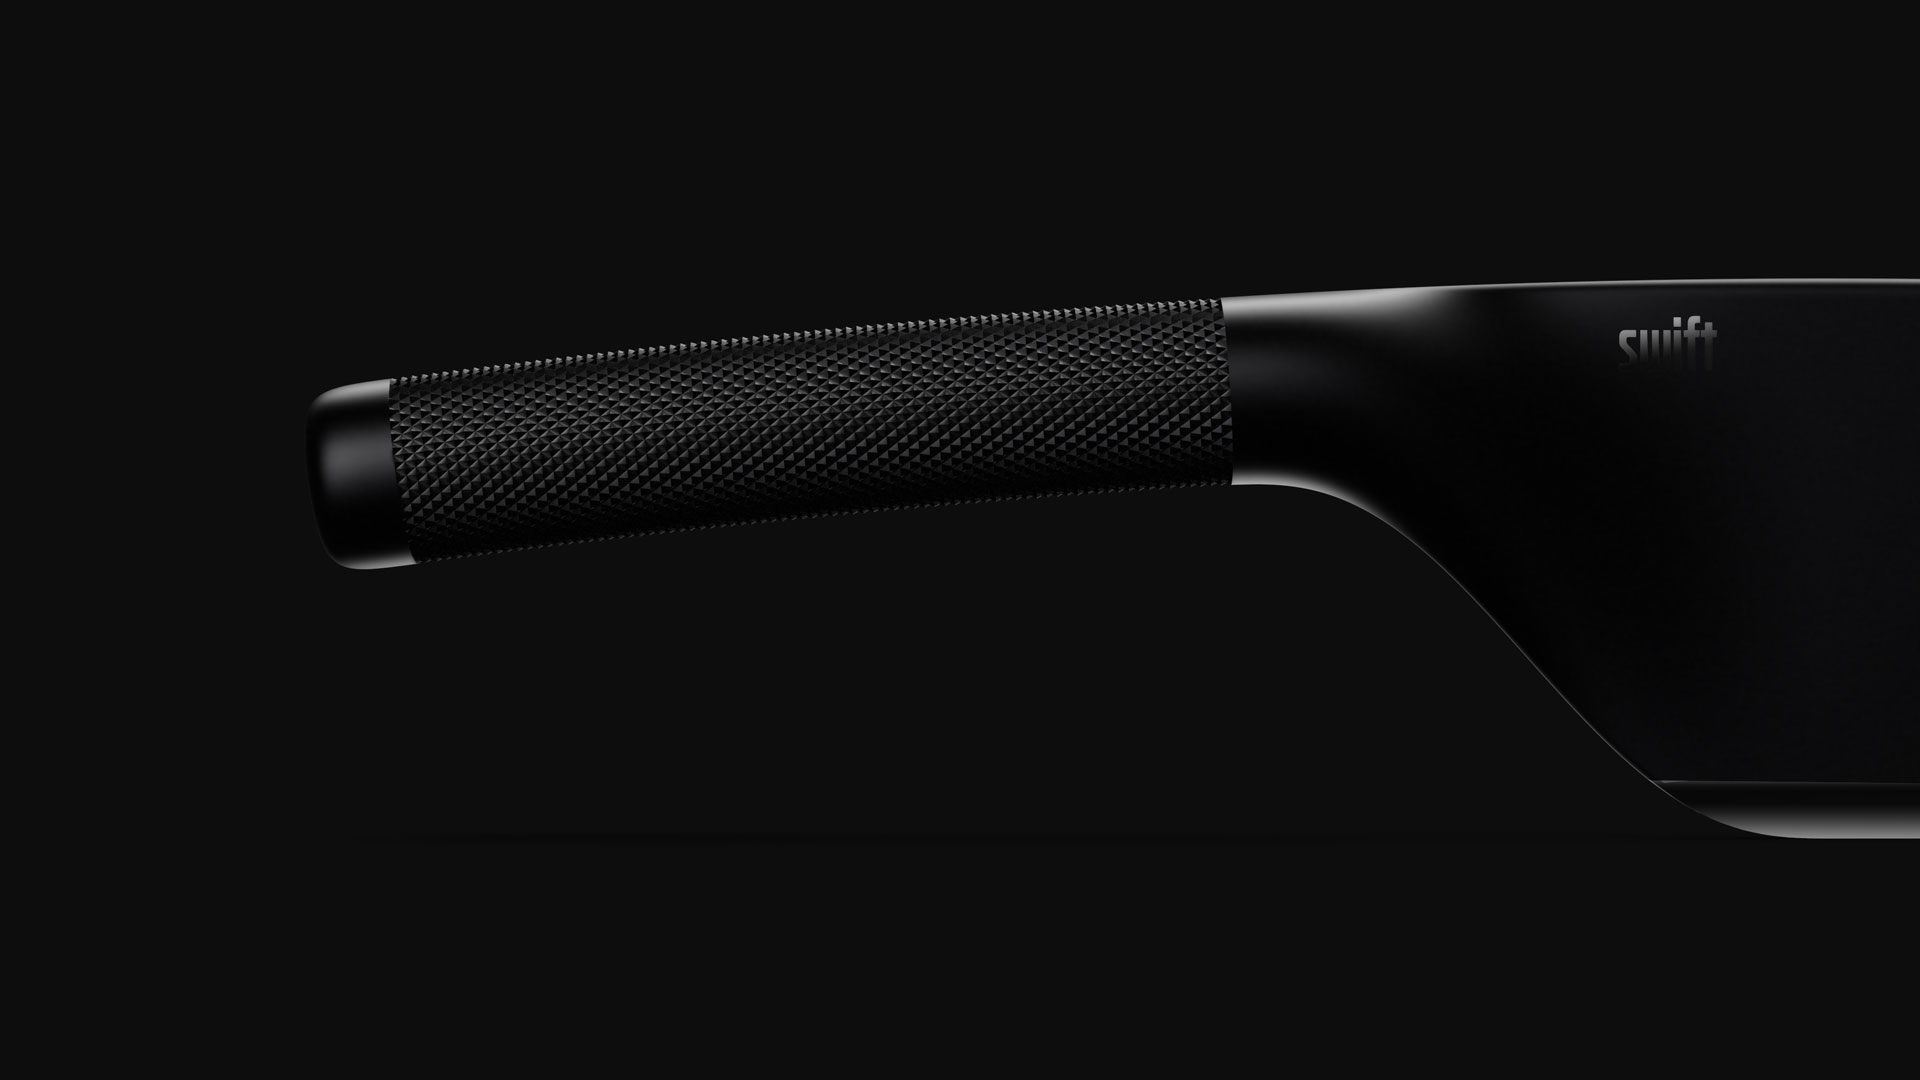 swift knife knurled handle render